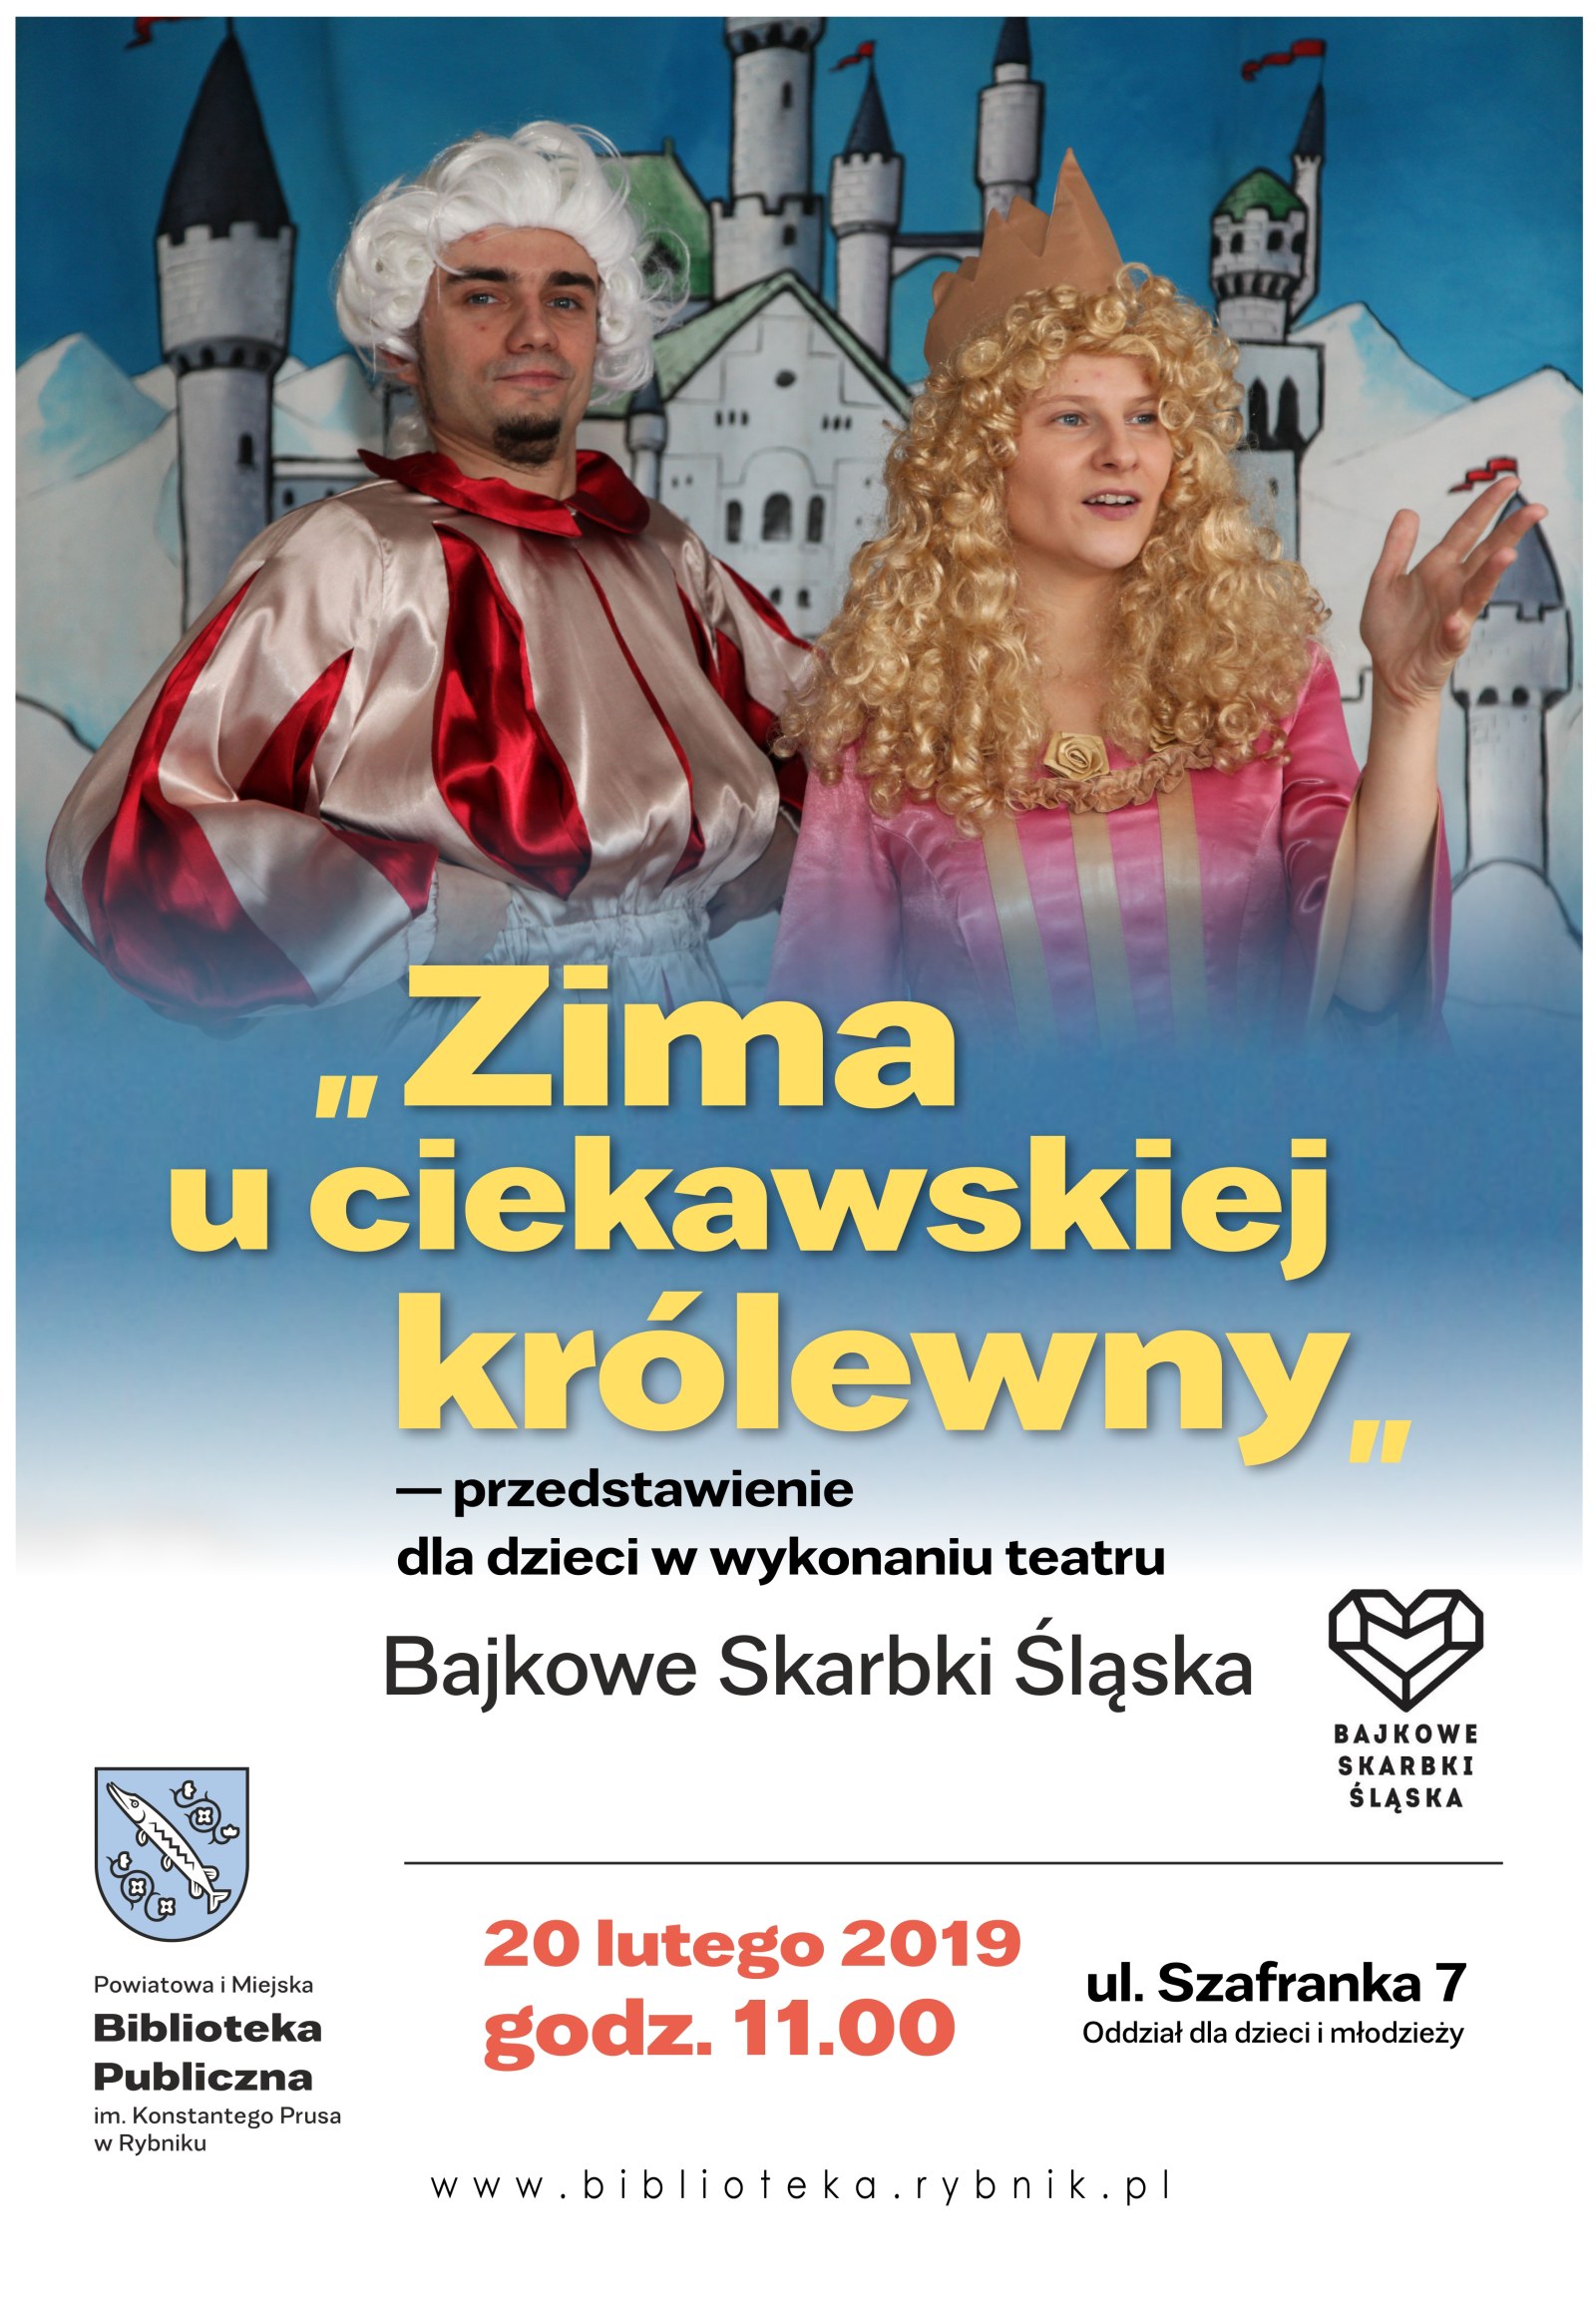 bajkowe_skarbki_slaska_zima_u_ciekawskiej_krolewny_plakat.jpg